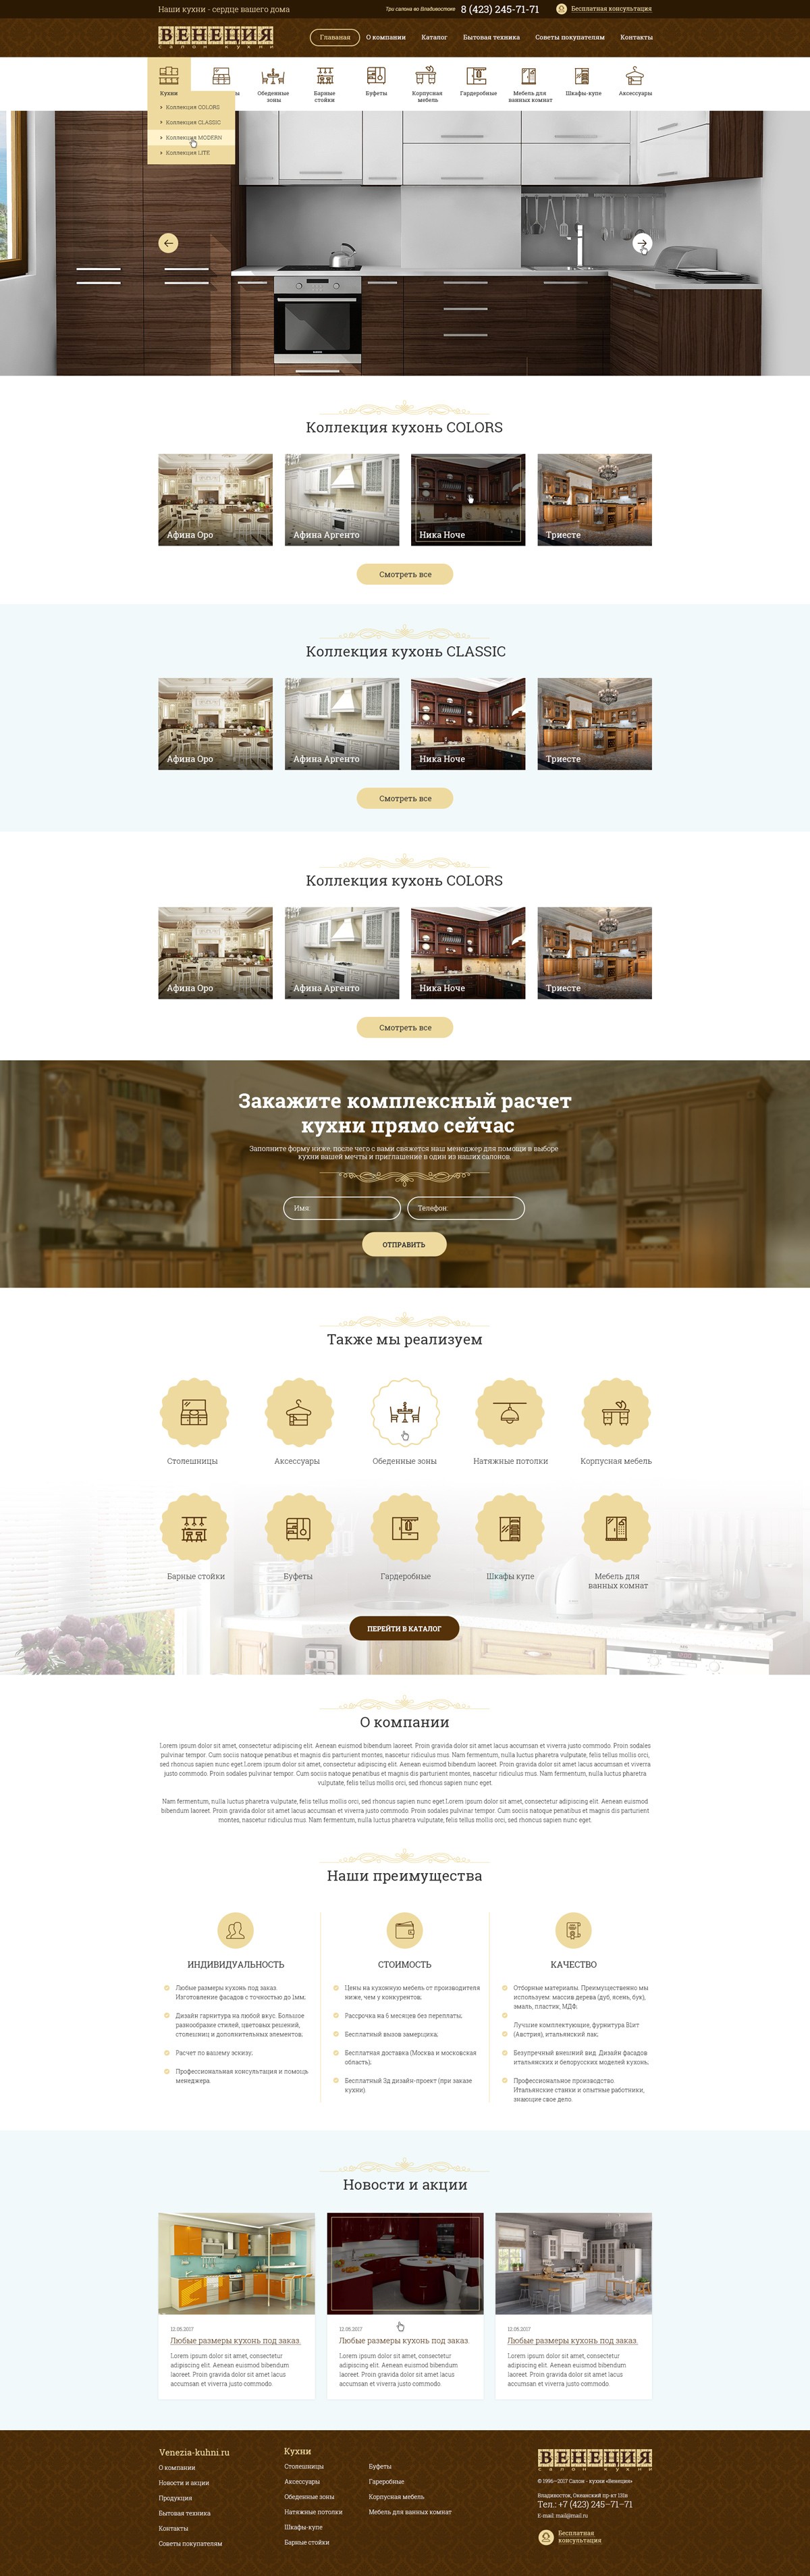 PSD Сайт салон кухни плюс 7 внутренних